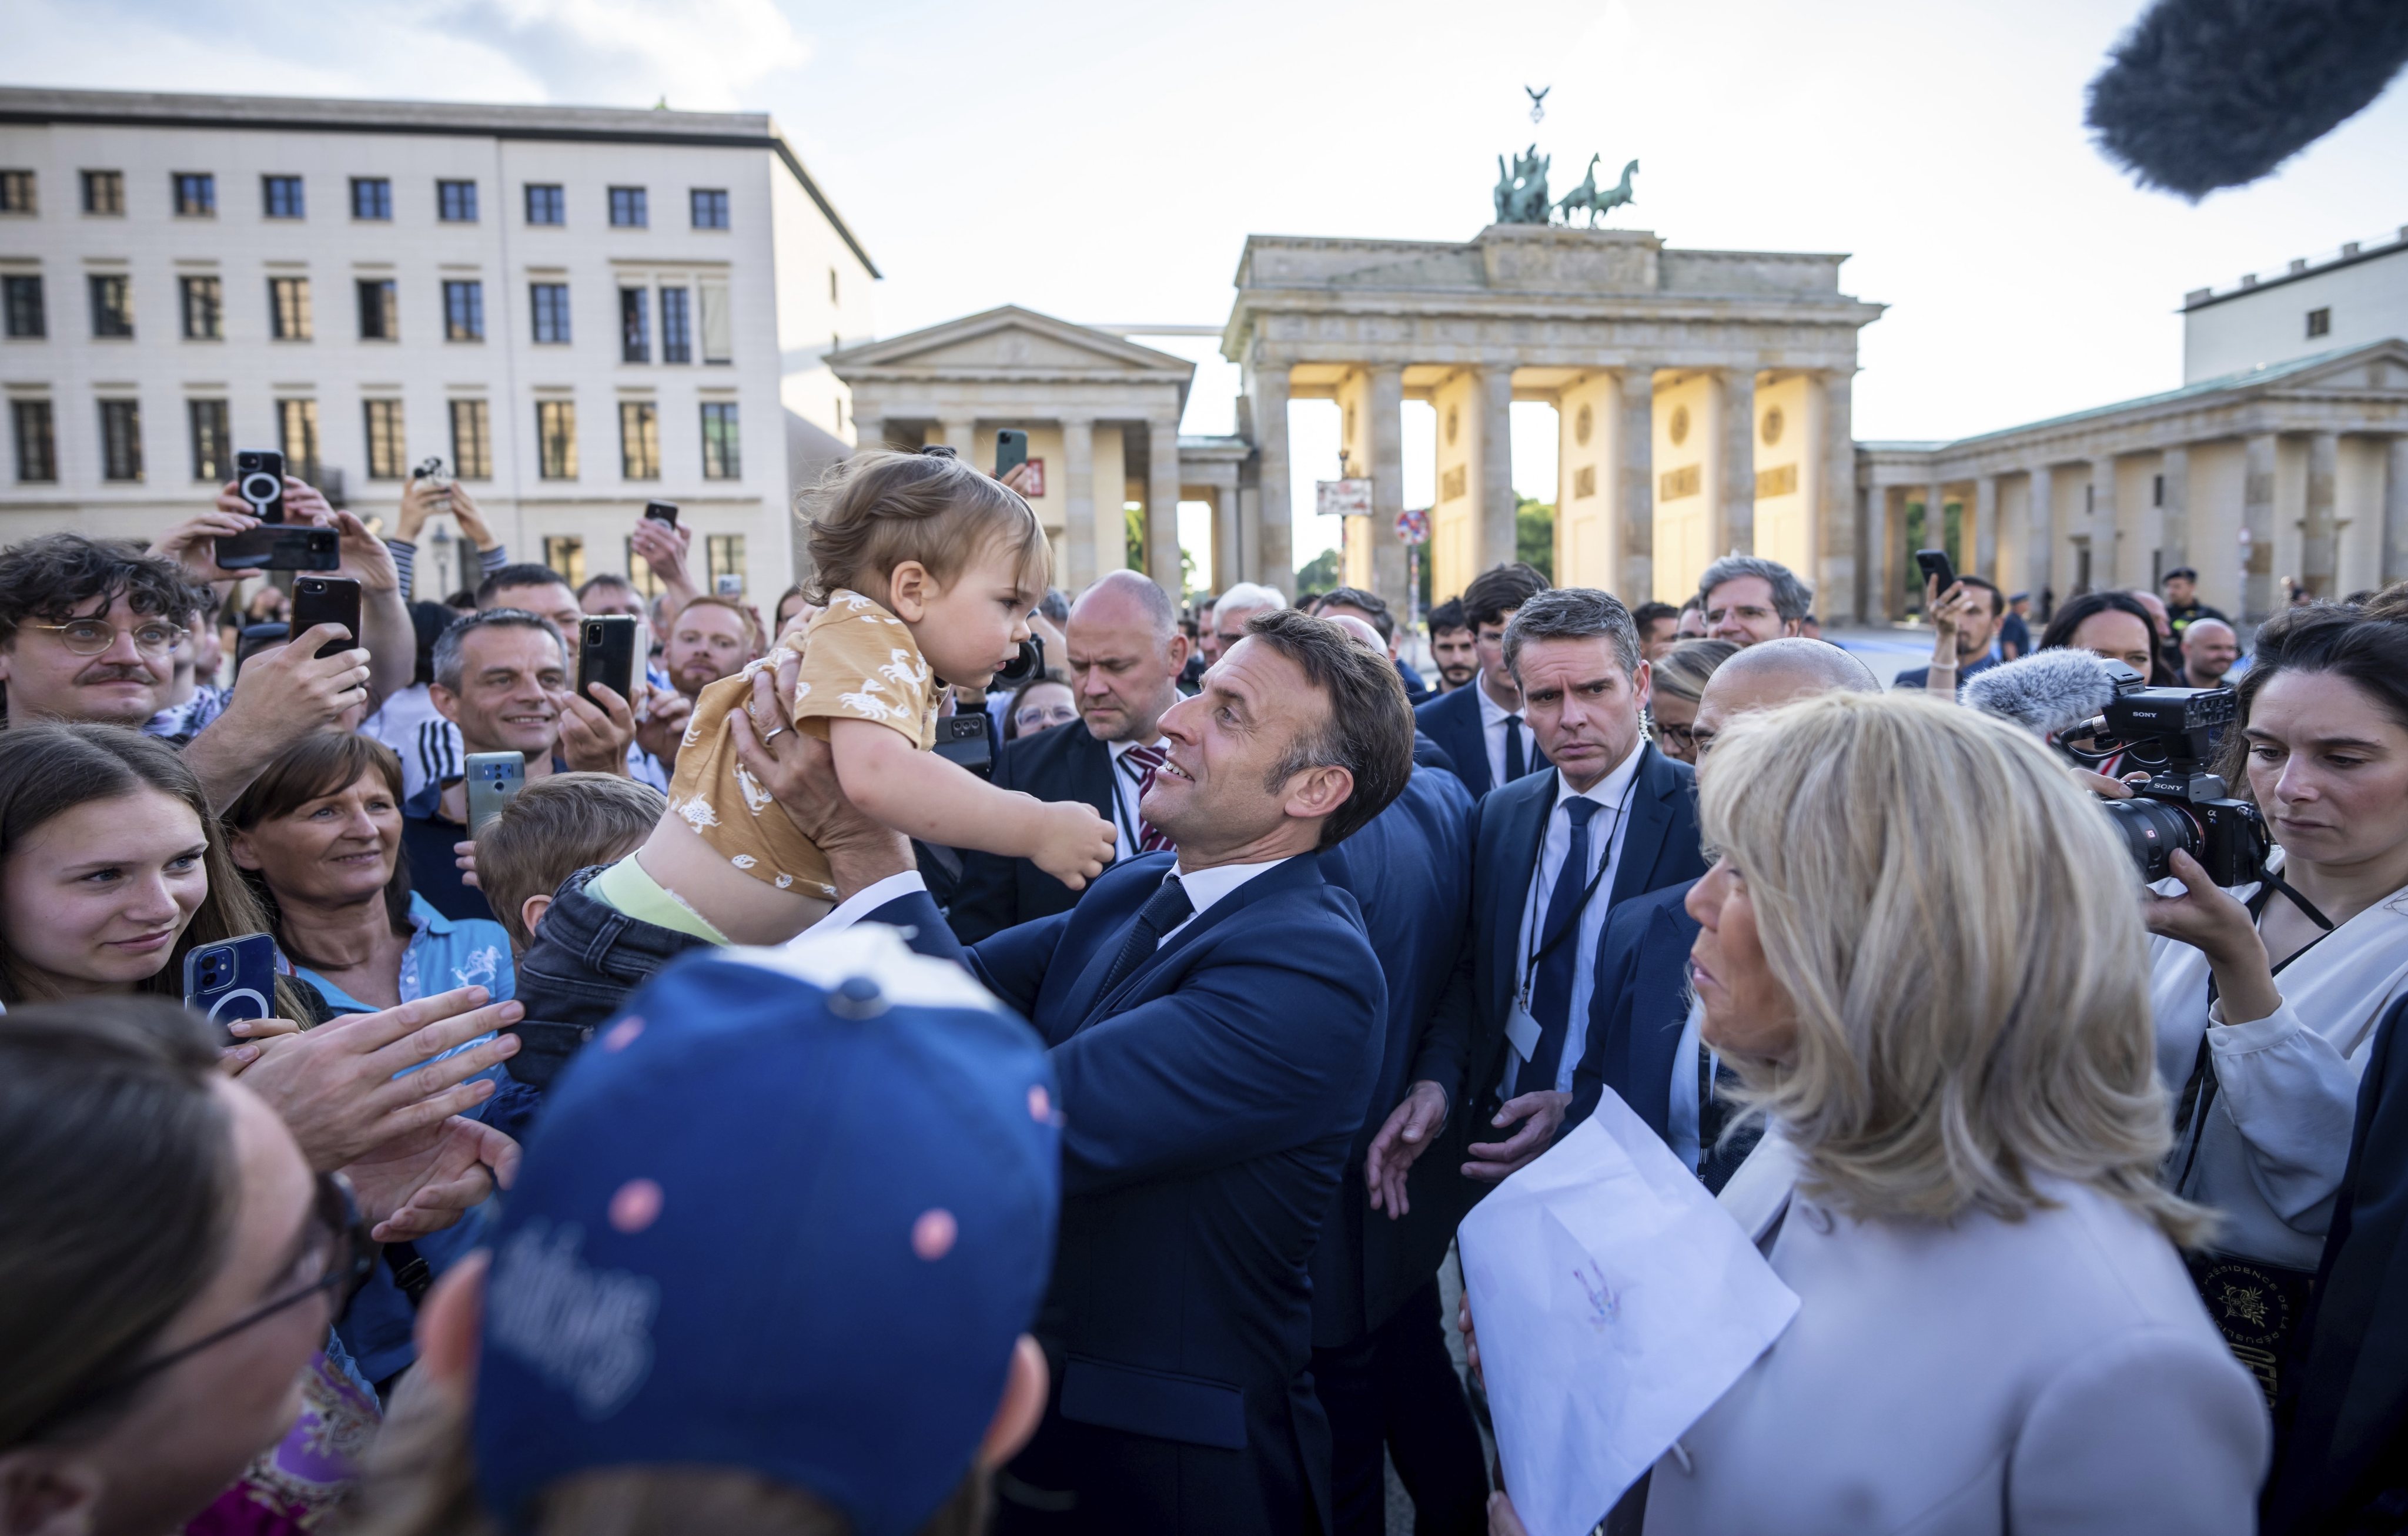 France’s President Emmanuel Macron holds a baby in Berlin, Germany on Sunday. Photo: dpa via AP